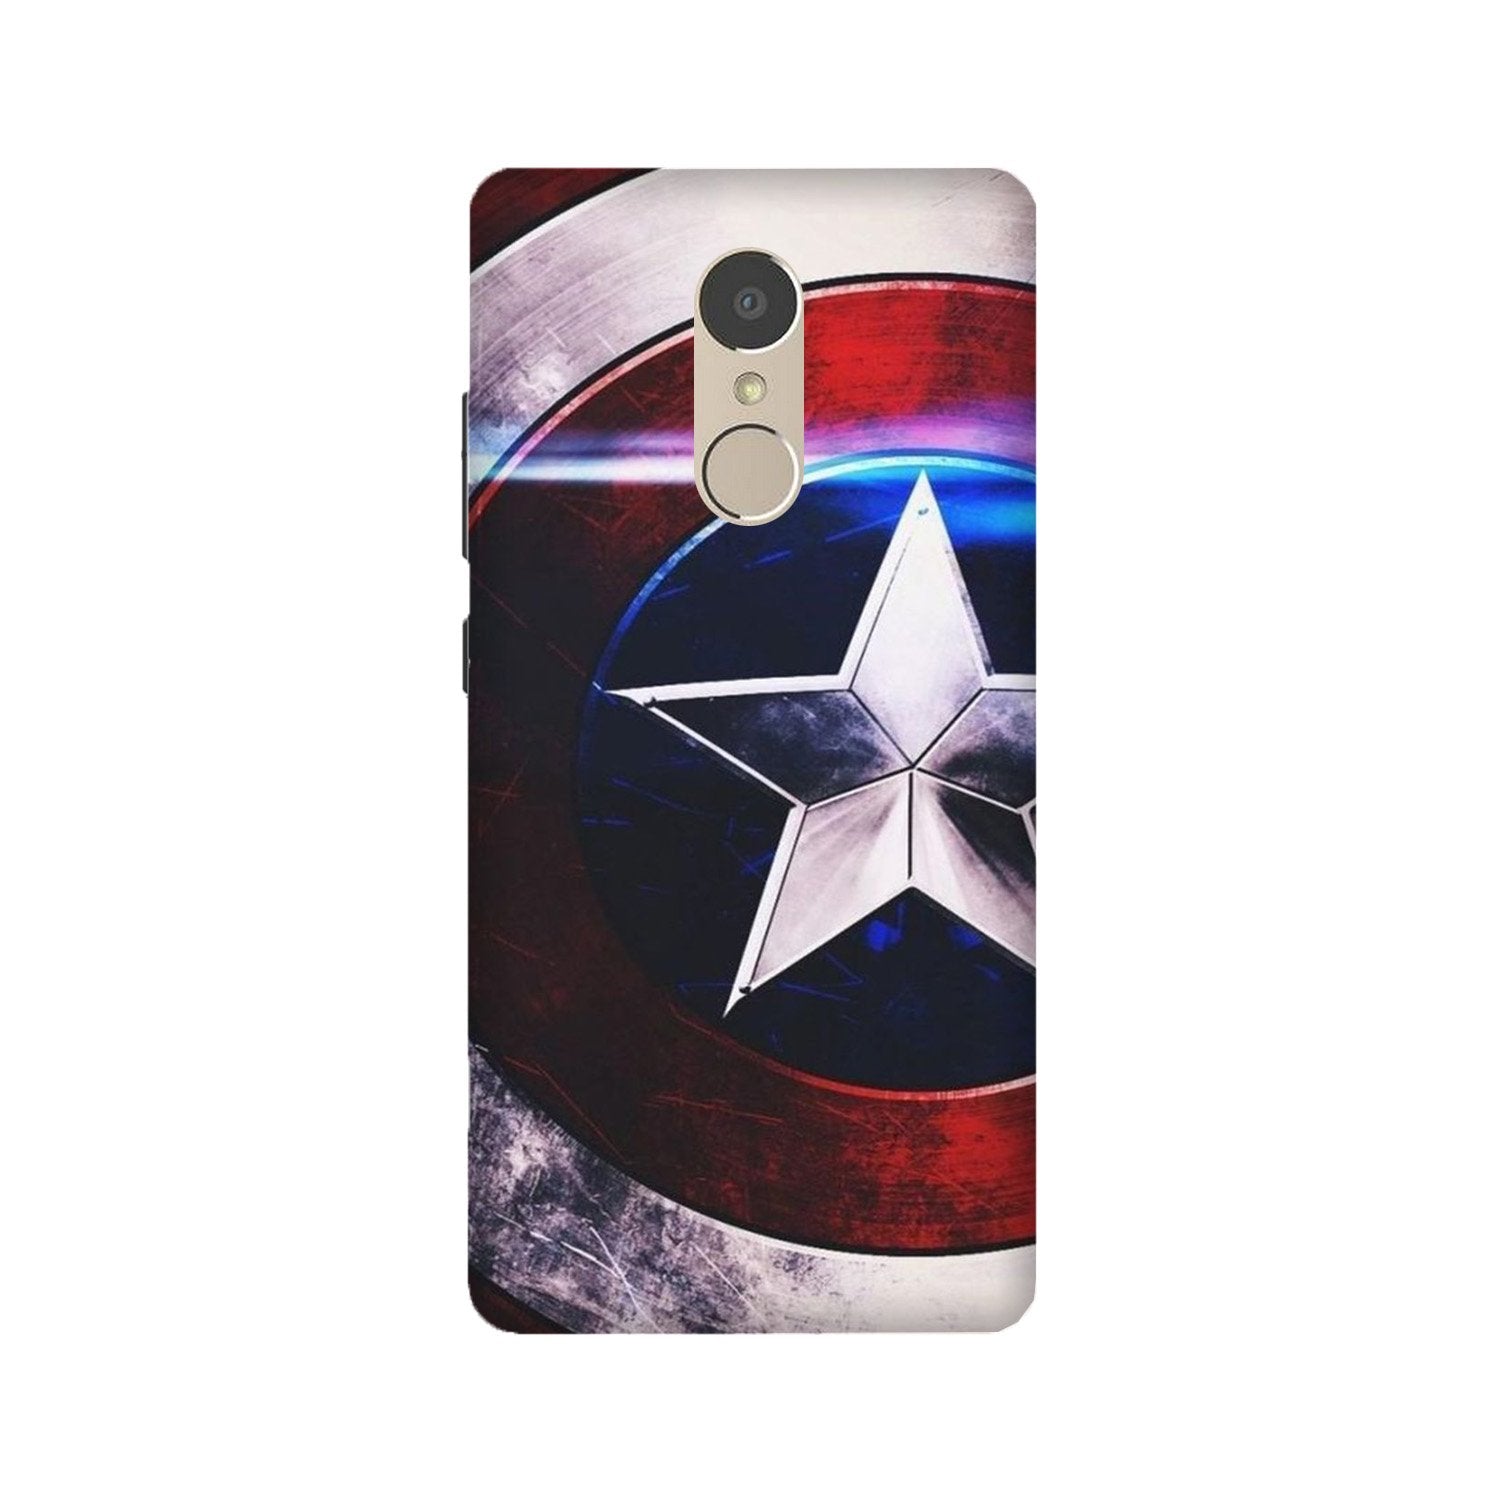 Captain America Shield Case for Lenovo K6 Note (Design No. 250)